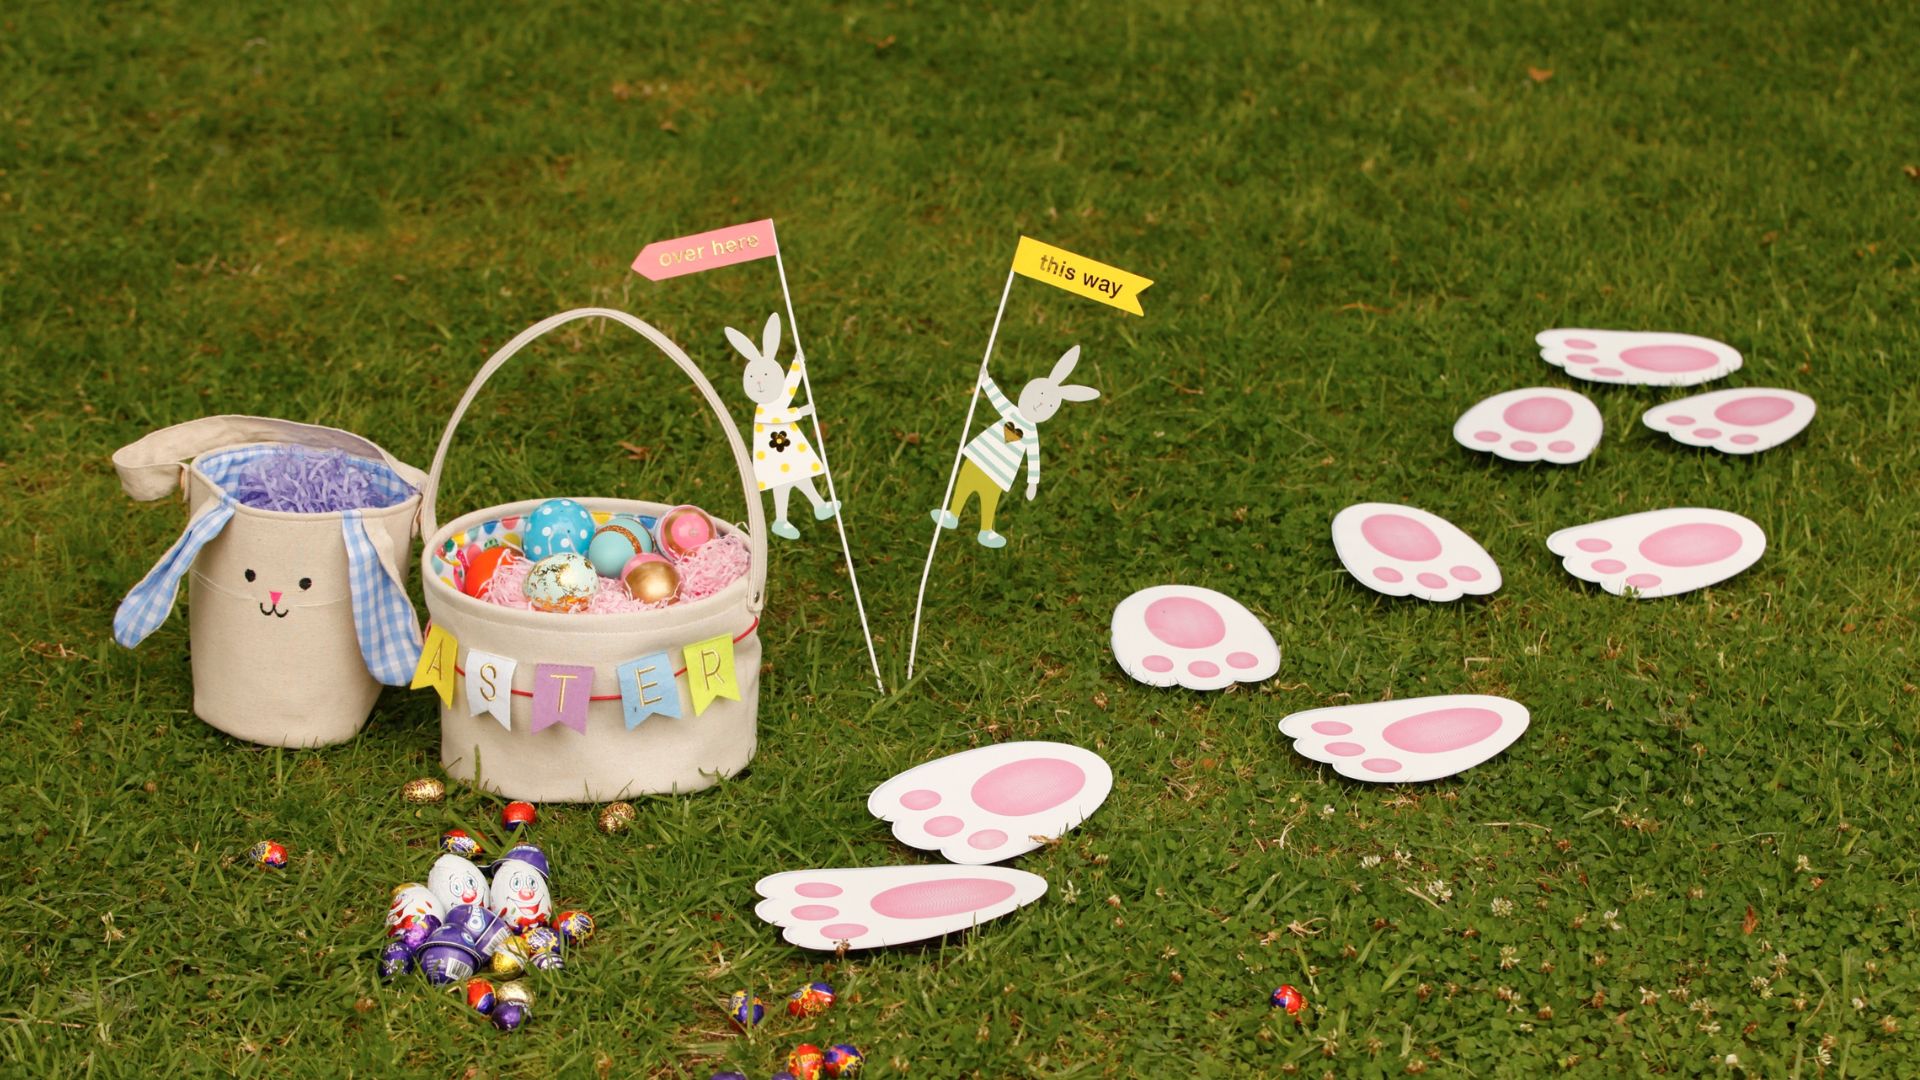 DIY Easter egg baskets, chocolate eggs, decor and bunny footprints